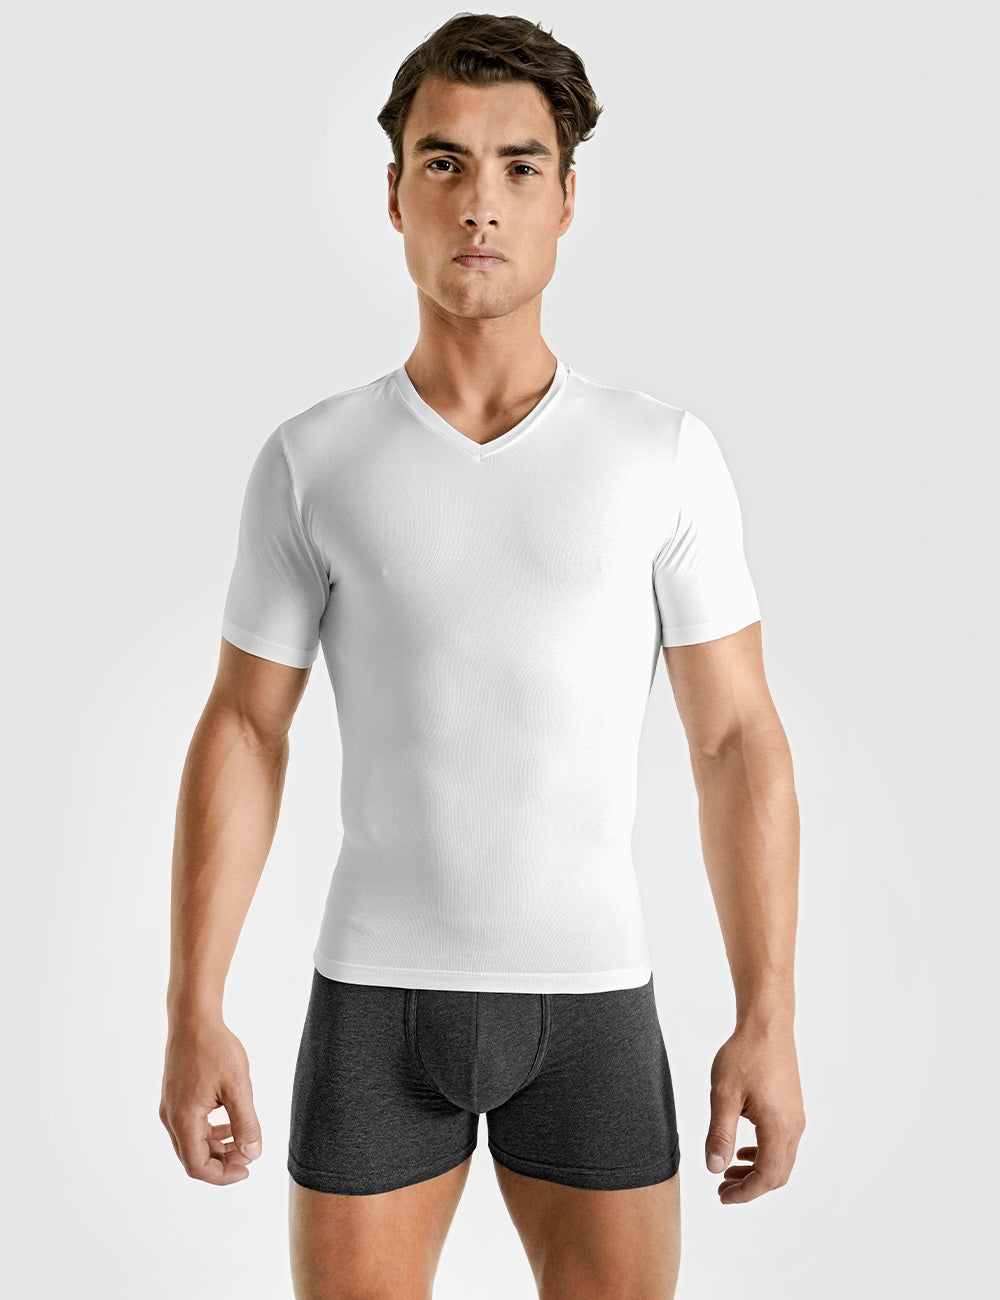 Rounderbum COMPRESSION Tech - Men Underwear, Shapewear, Swimwear ...